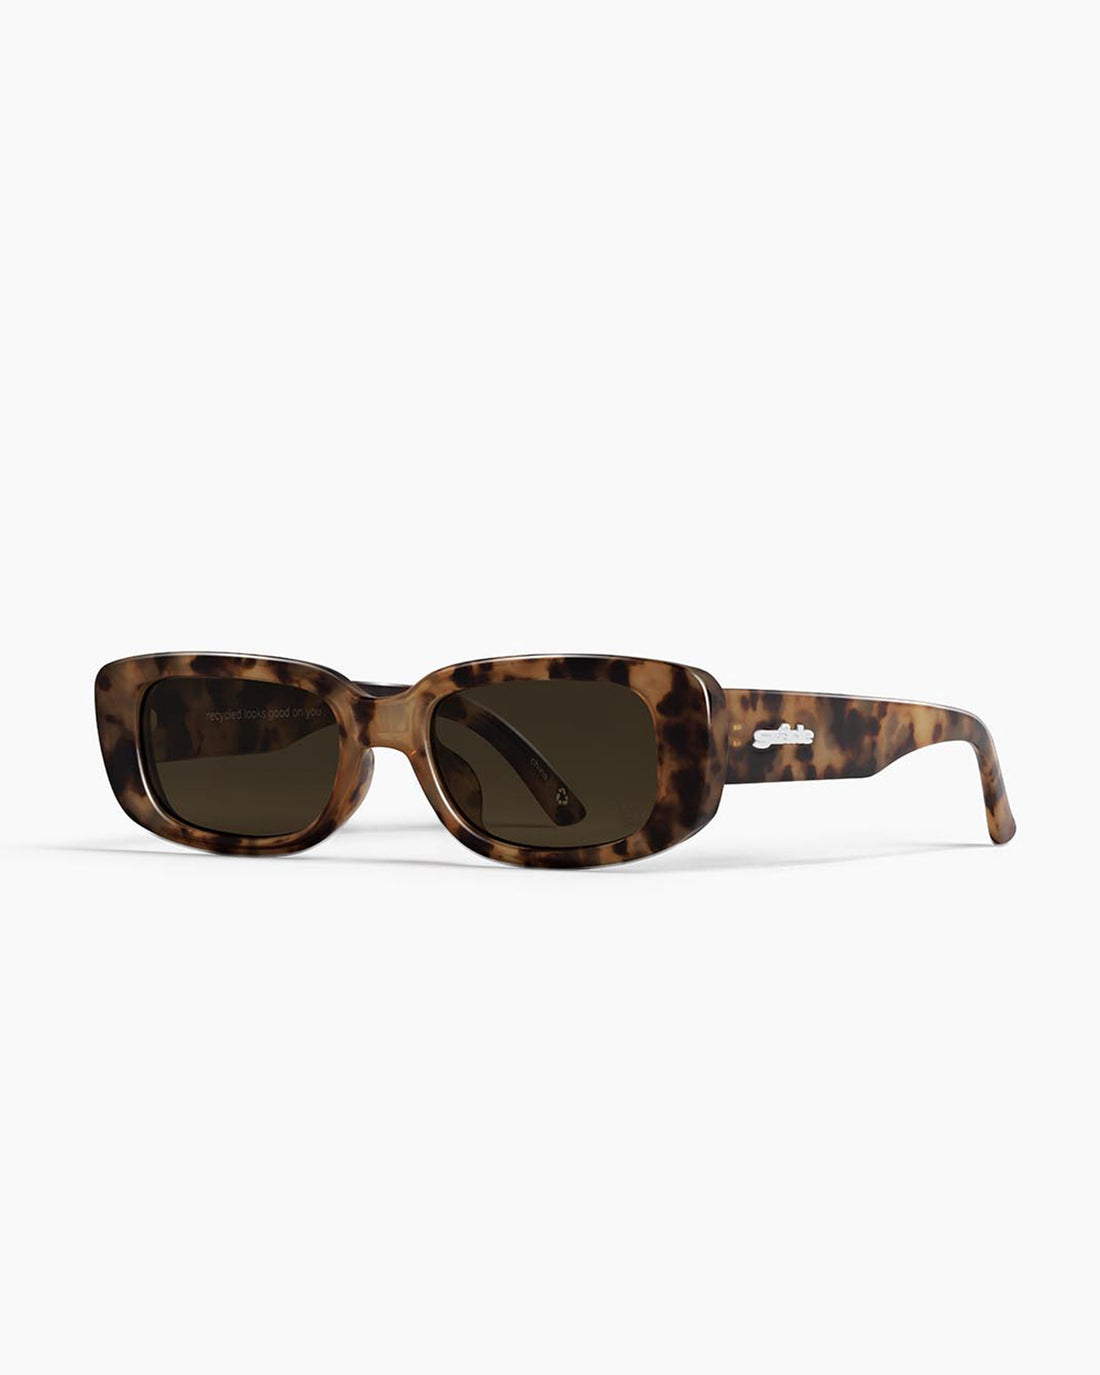 Shop Szade Dollin Sunglasses in Coquina Tortoise Online | Szade 